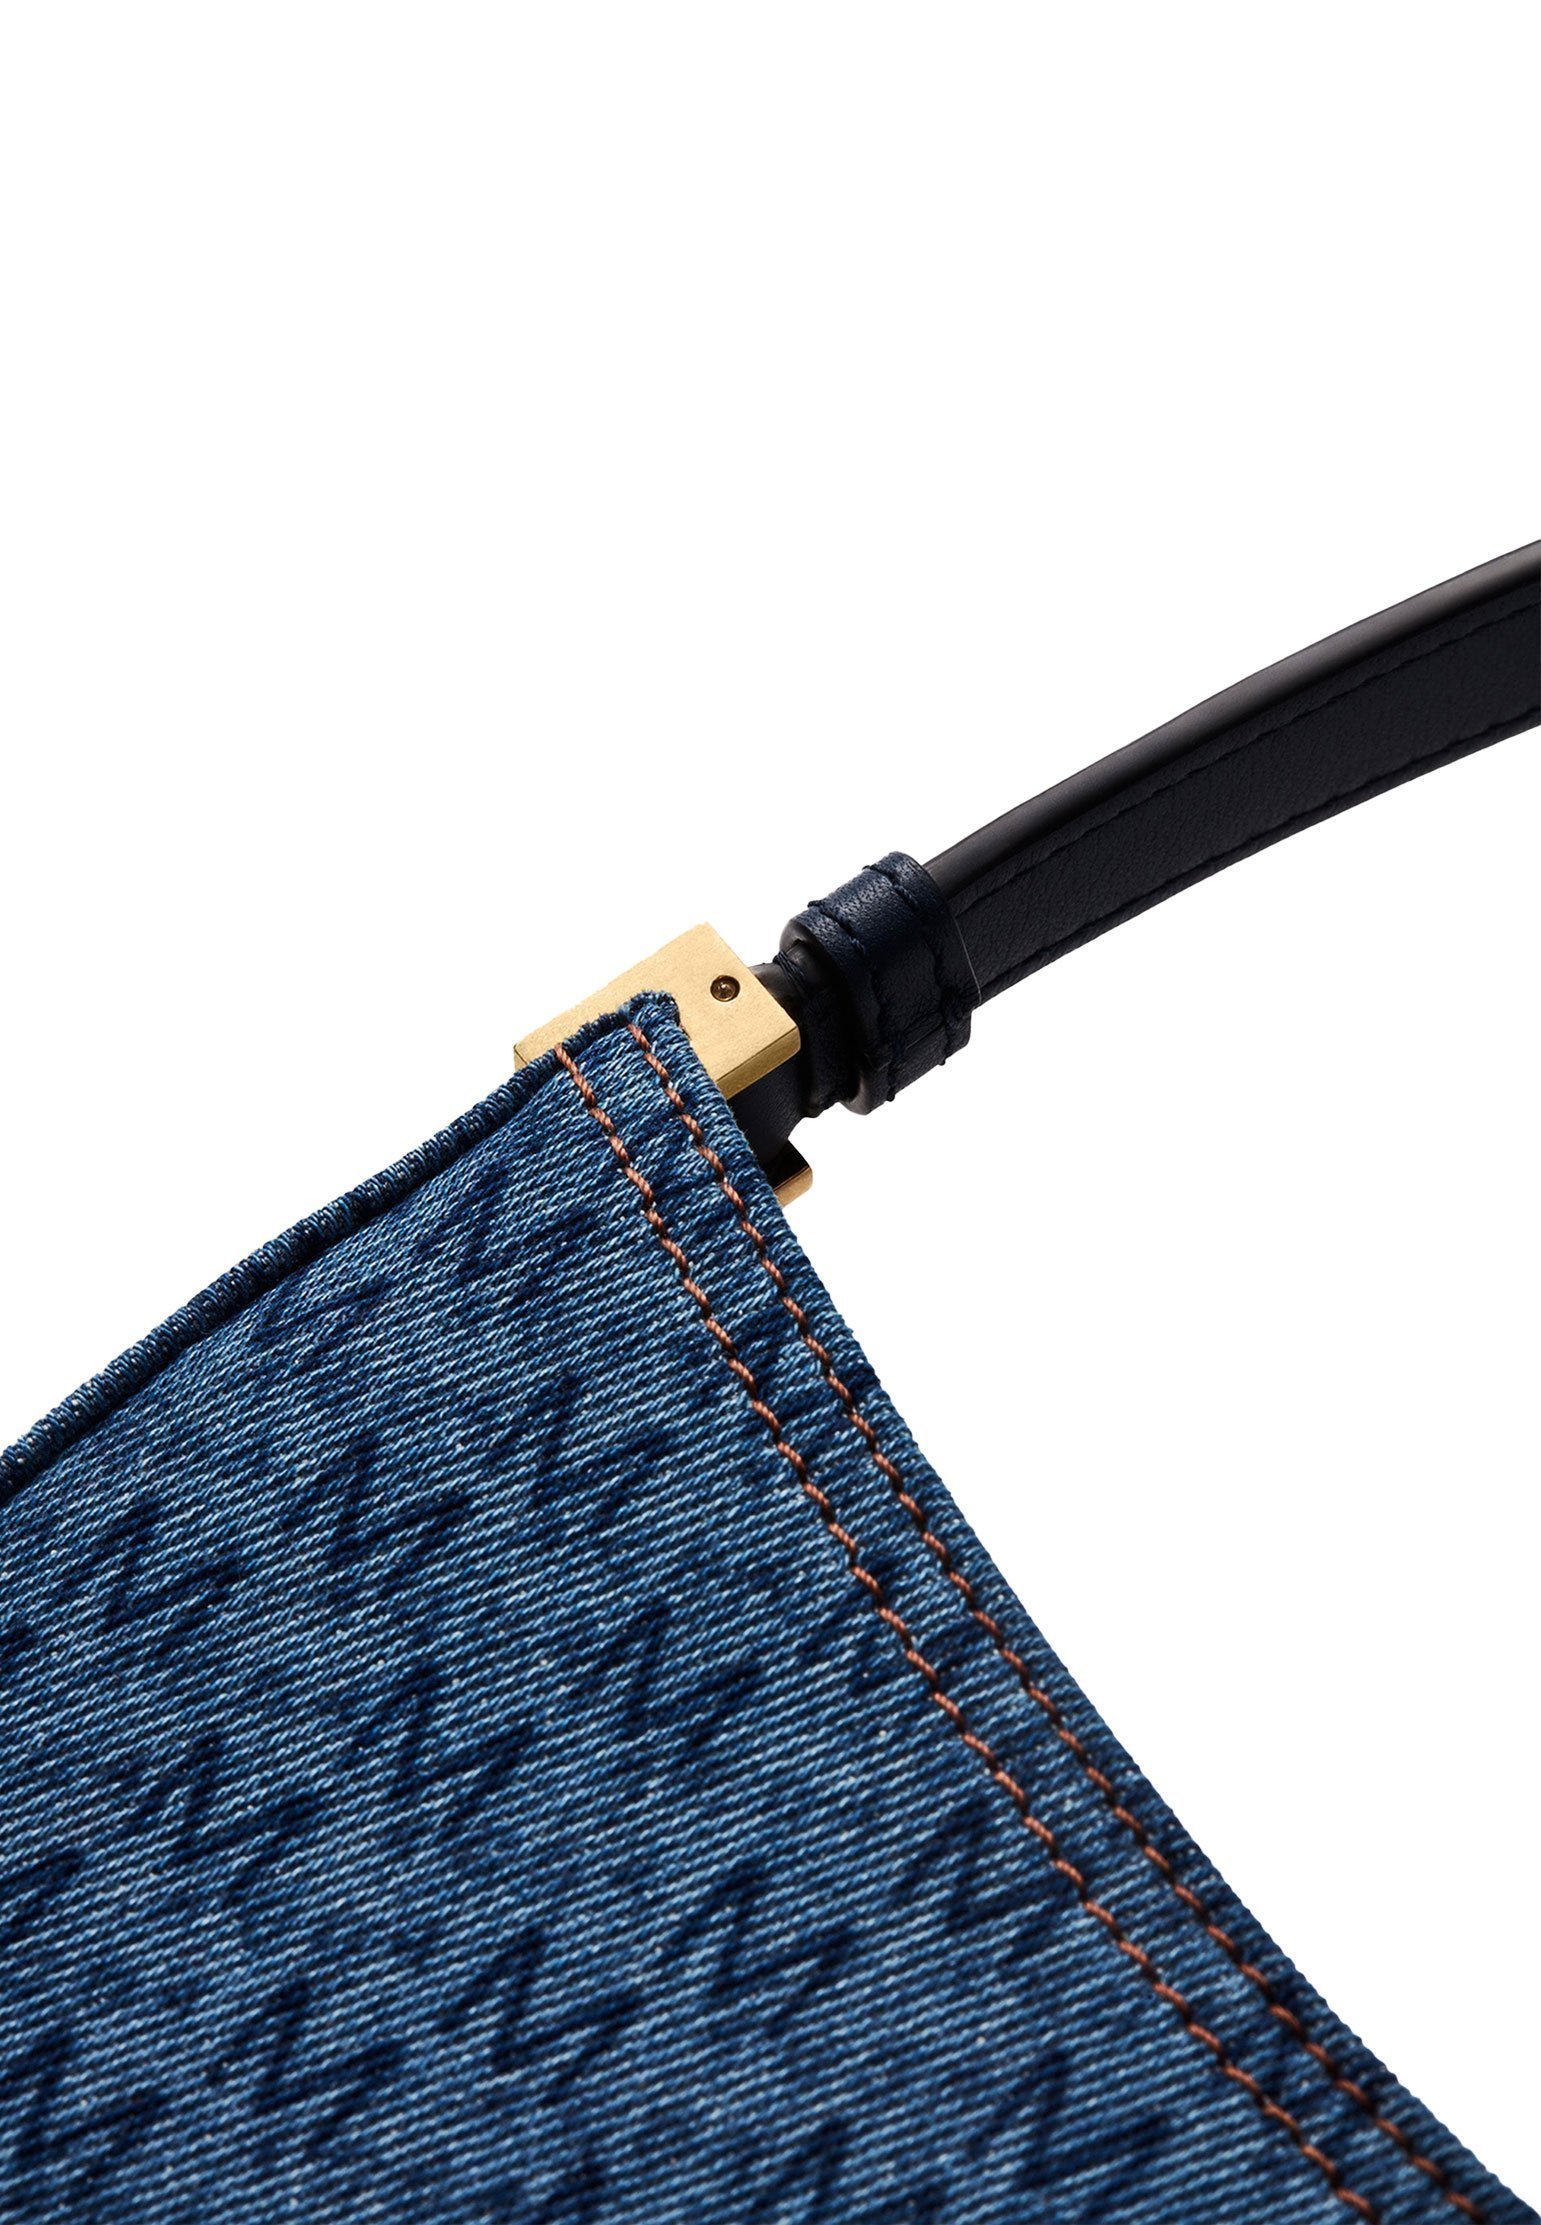 Bag MAGDA BUTRYM Color: blue (Code: 3594) in online store Allure